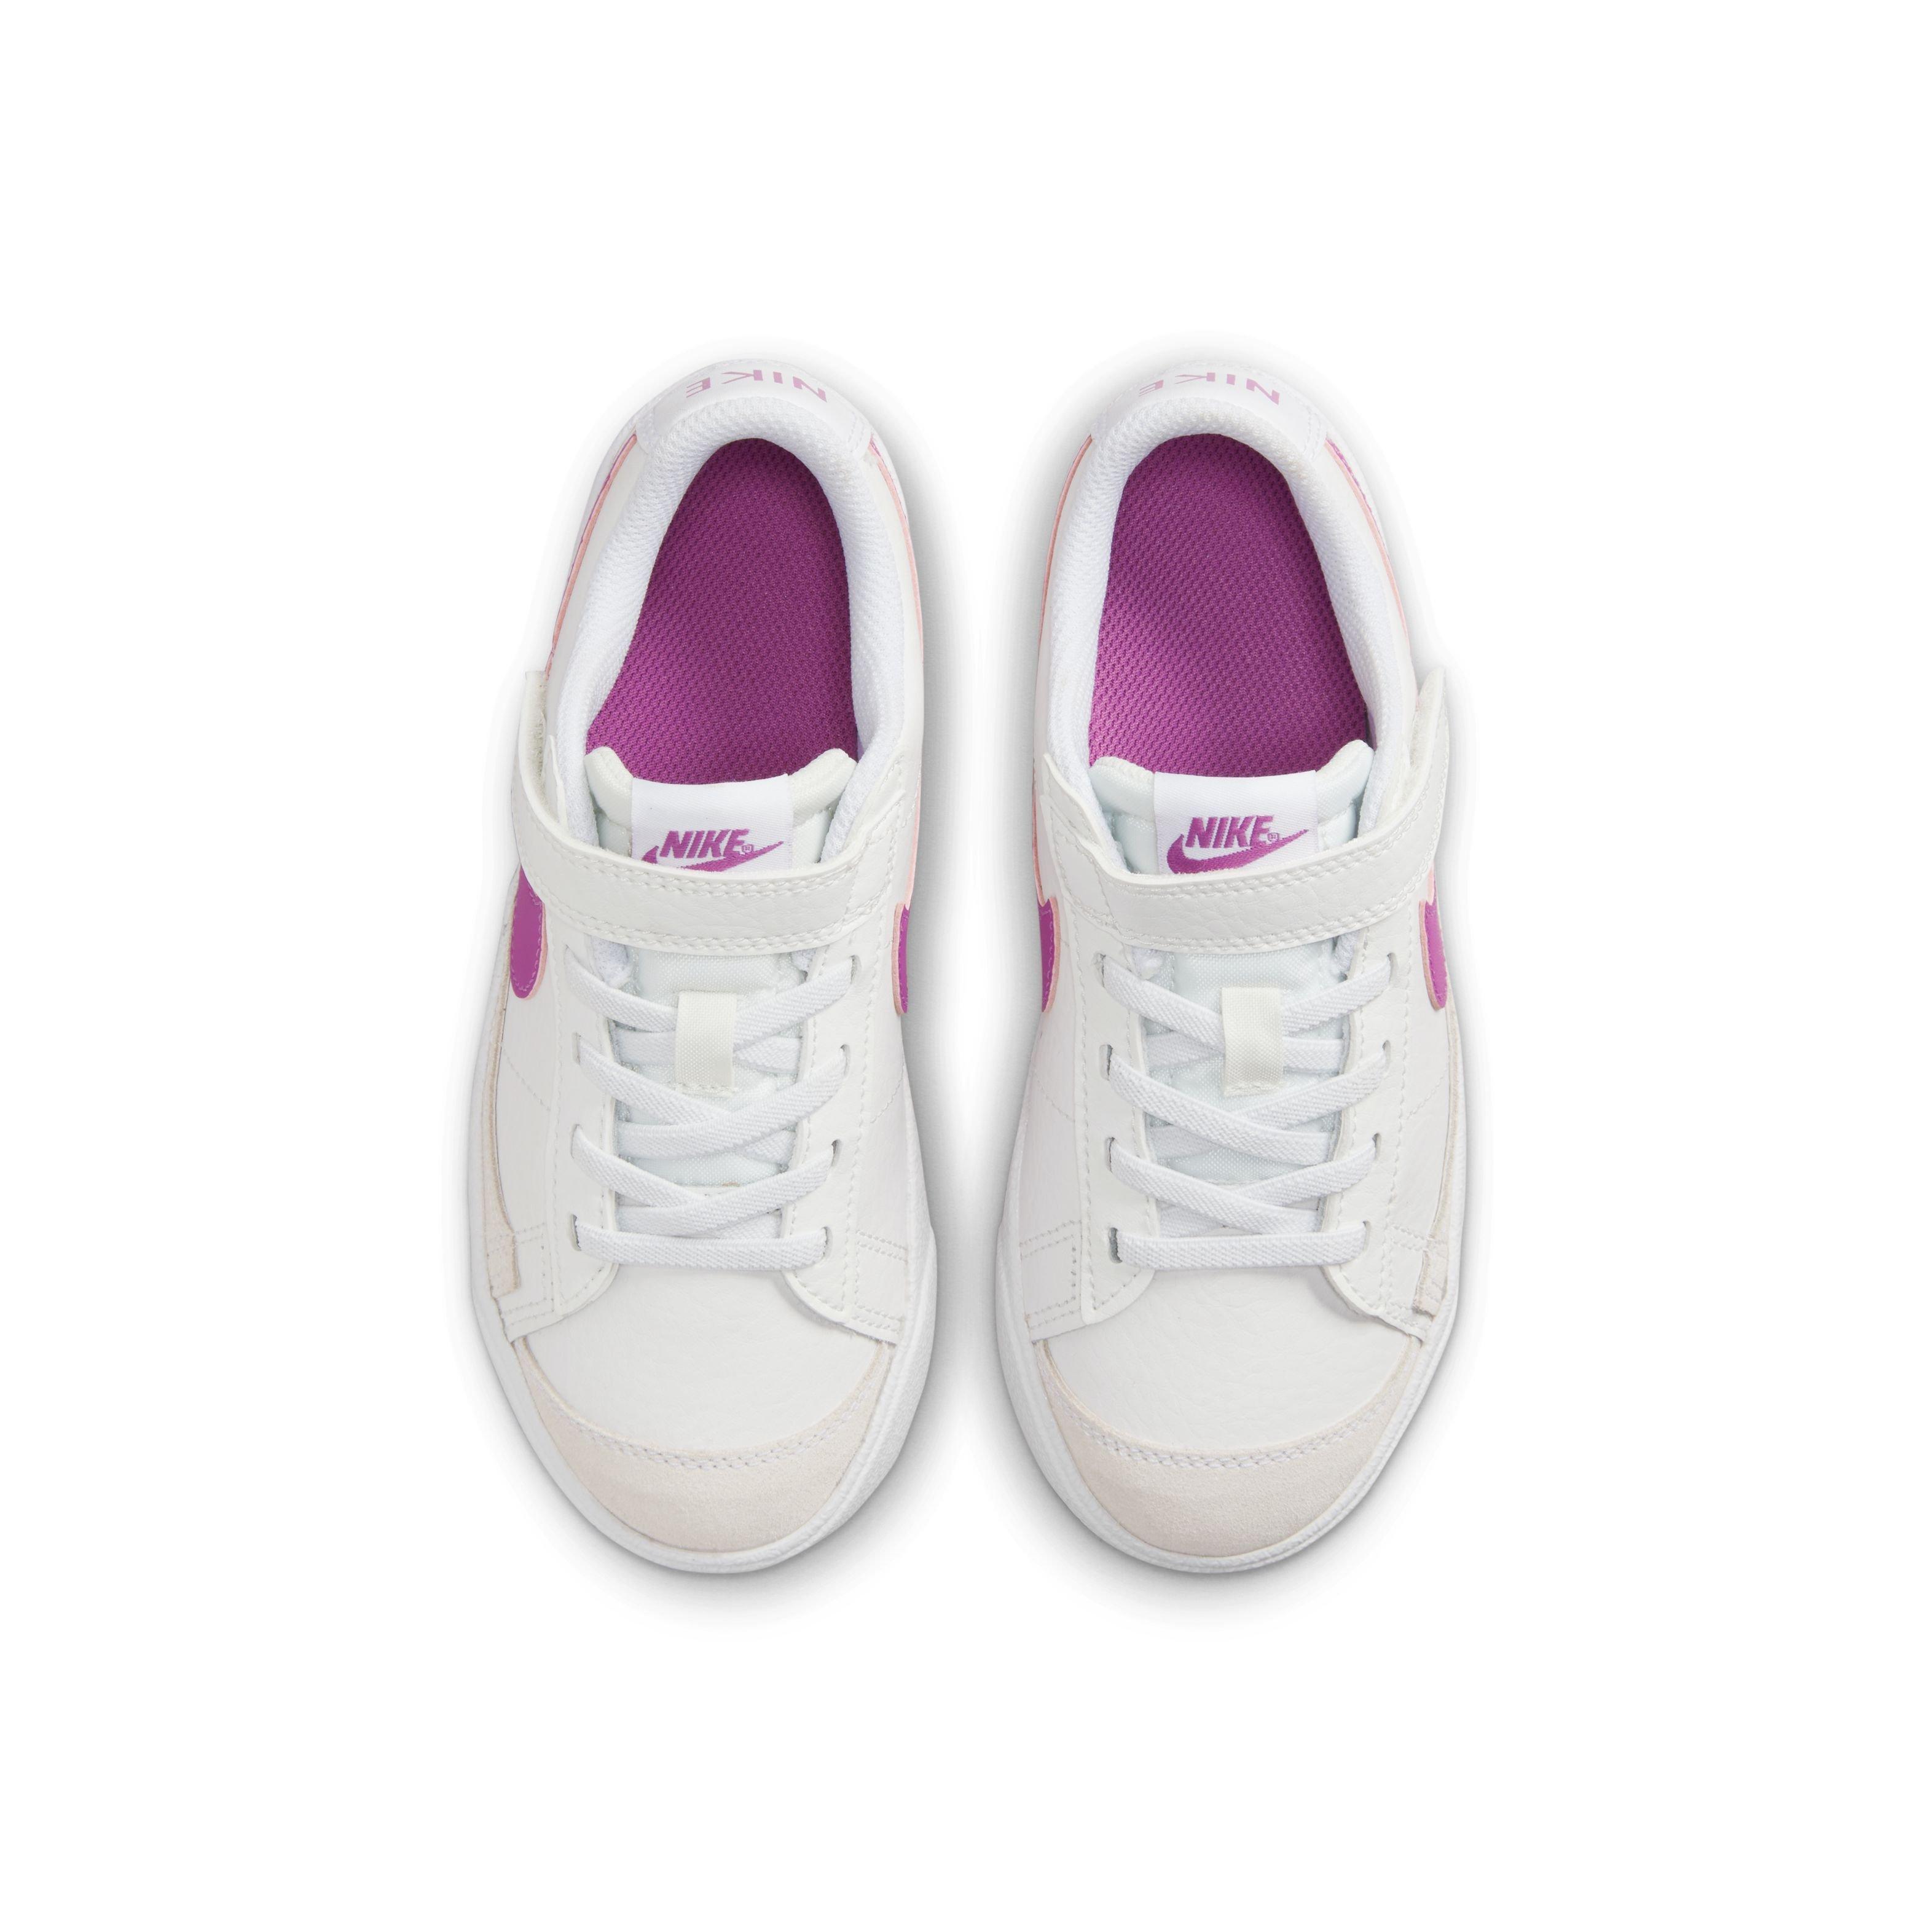 White x Nike Blazer Mid — MissgolfShops - nike zoom fit training shoe in  fuchsia glow color - Off